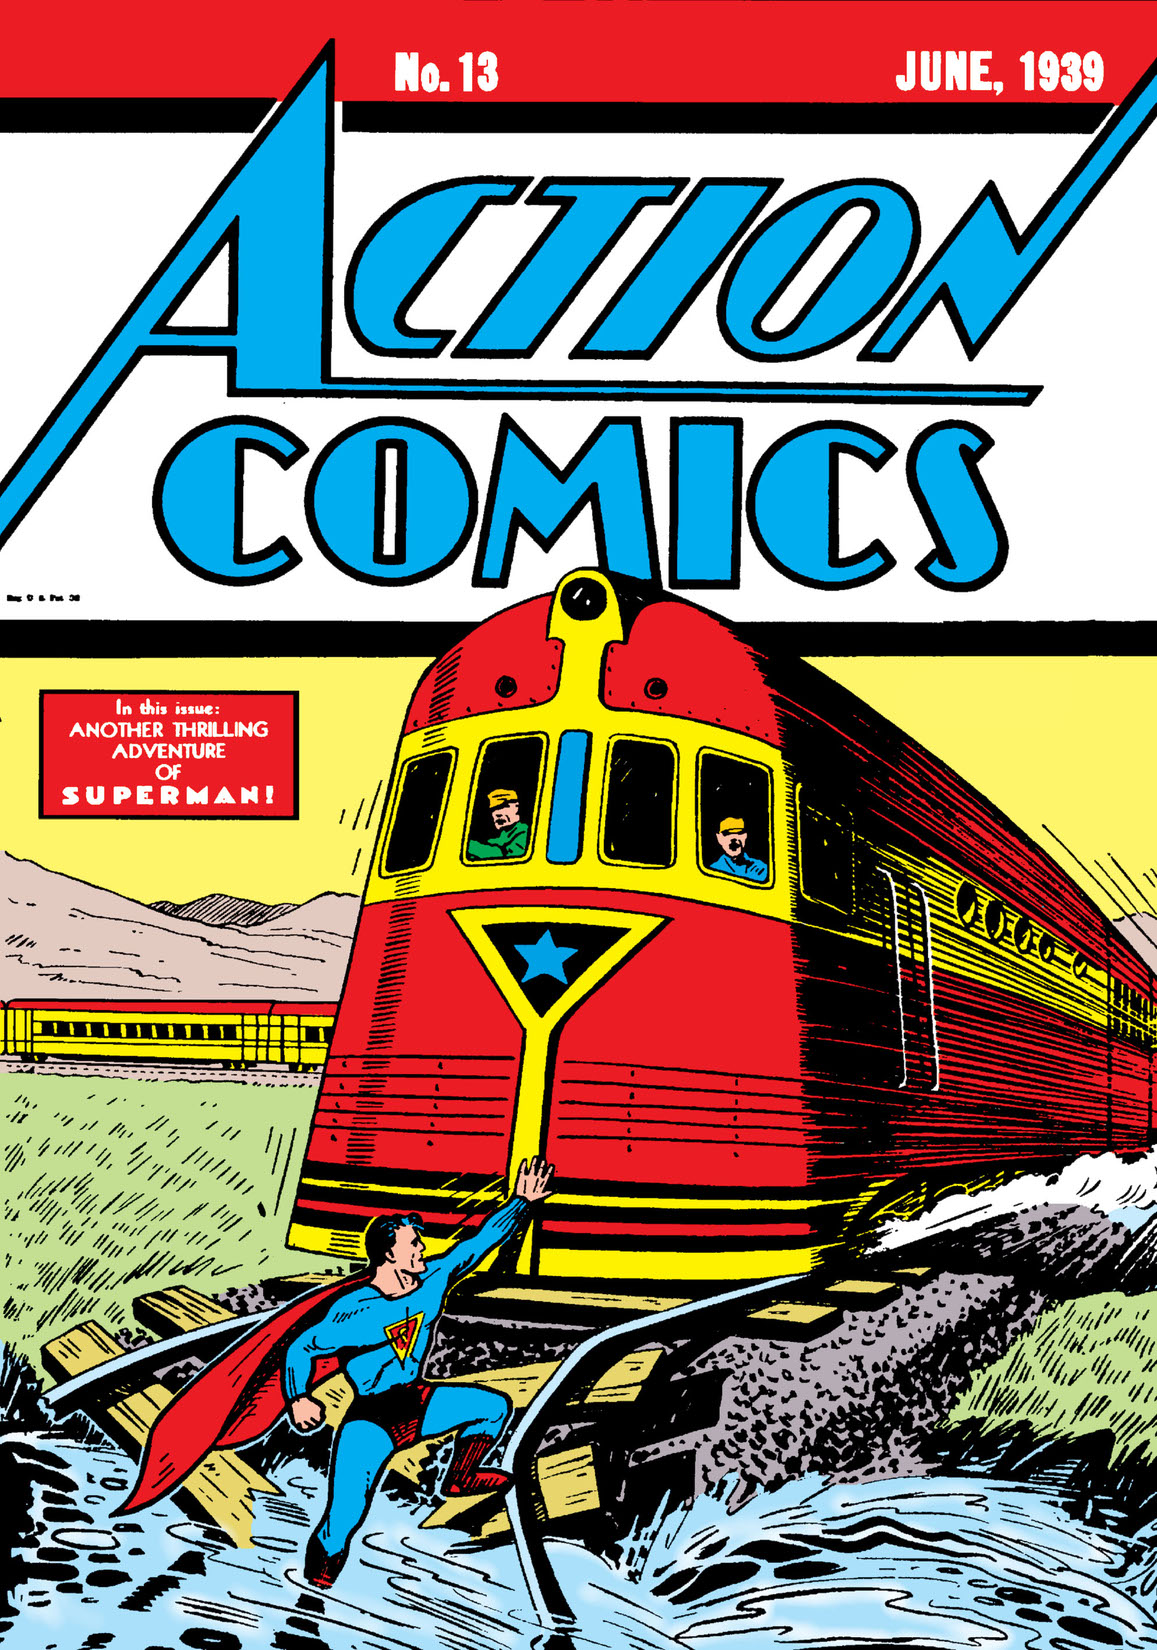 Action Comics (1938-) #13 preview images